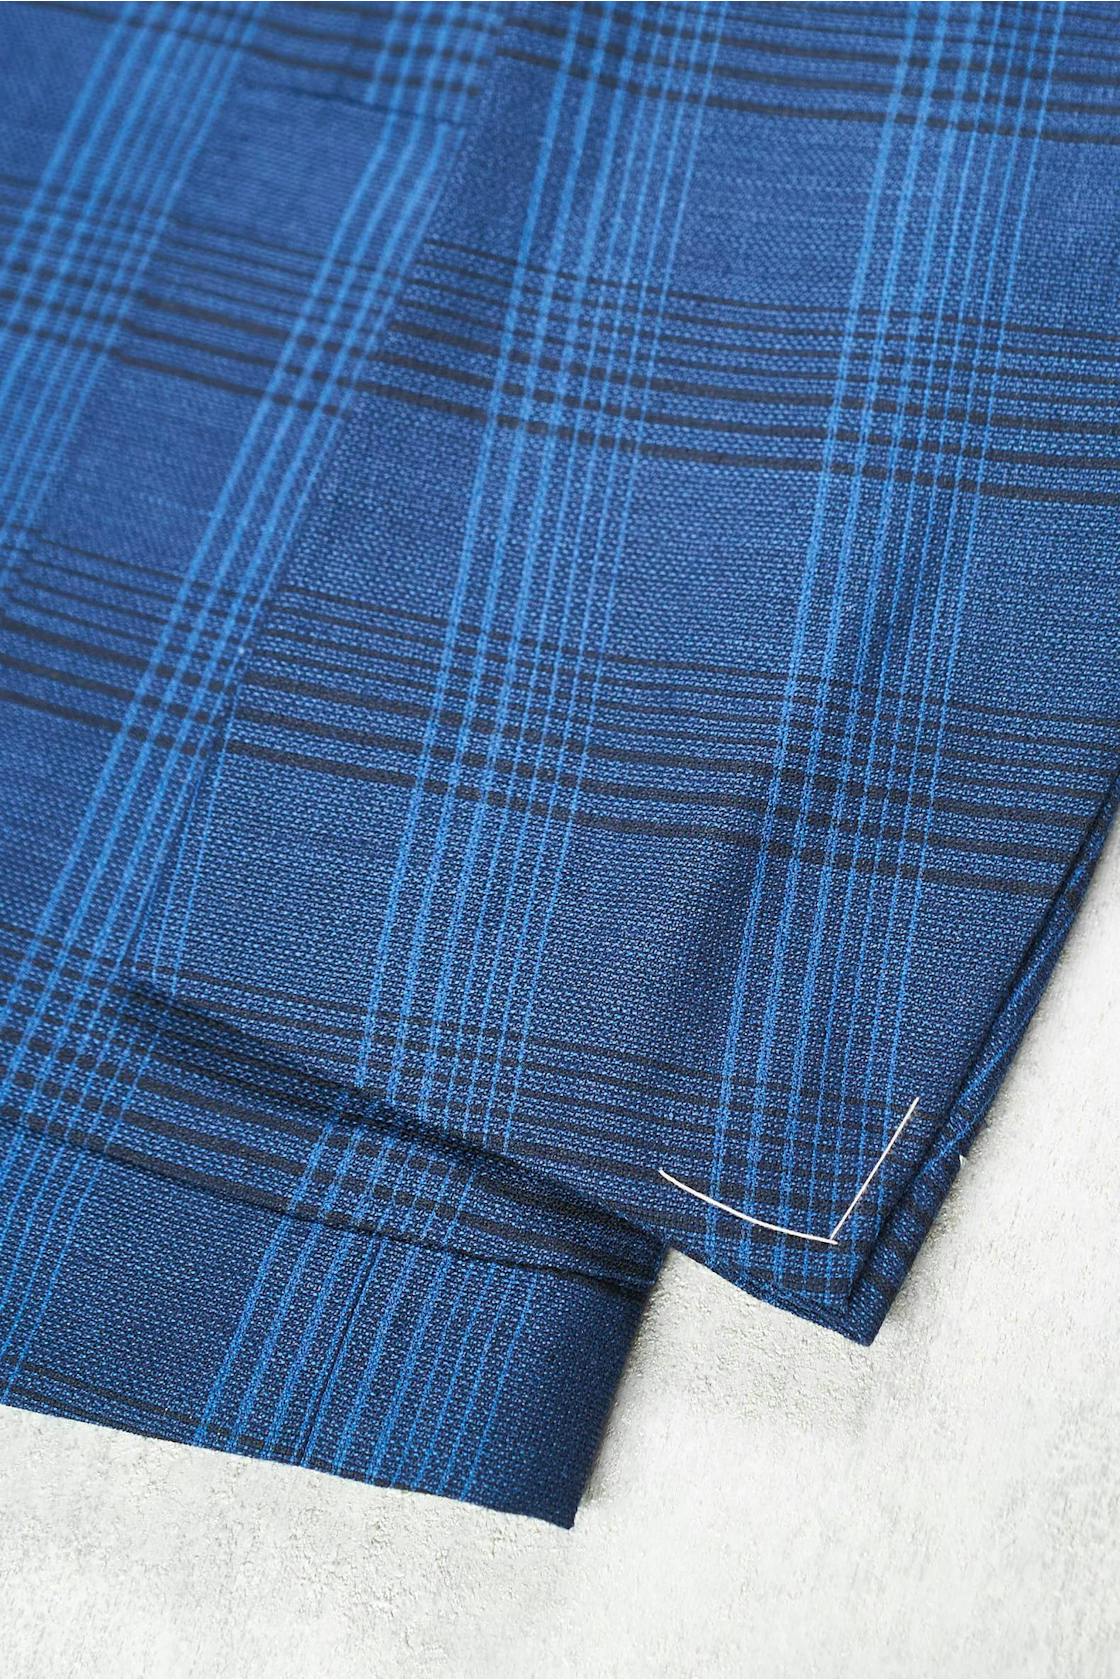 Ring Jacket 184 Blue Black Check Wool/Silk/Linen/Cashmere Sport Coat